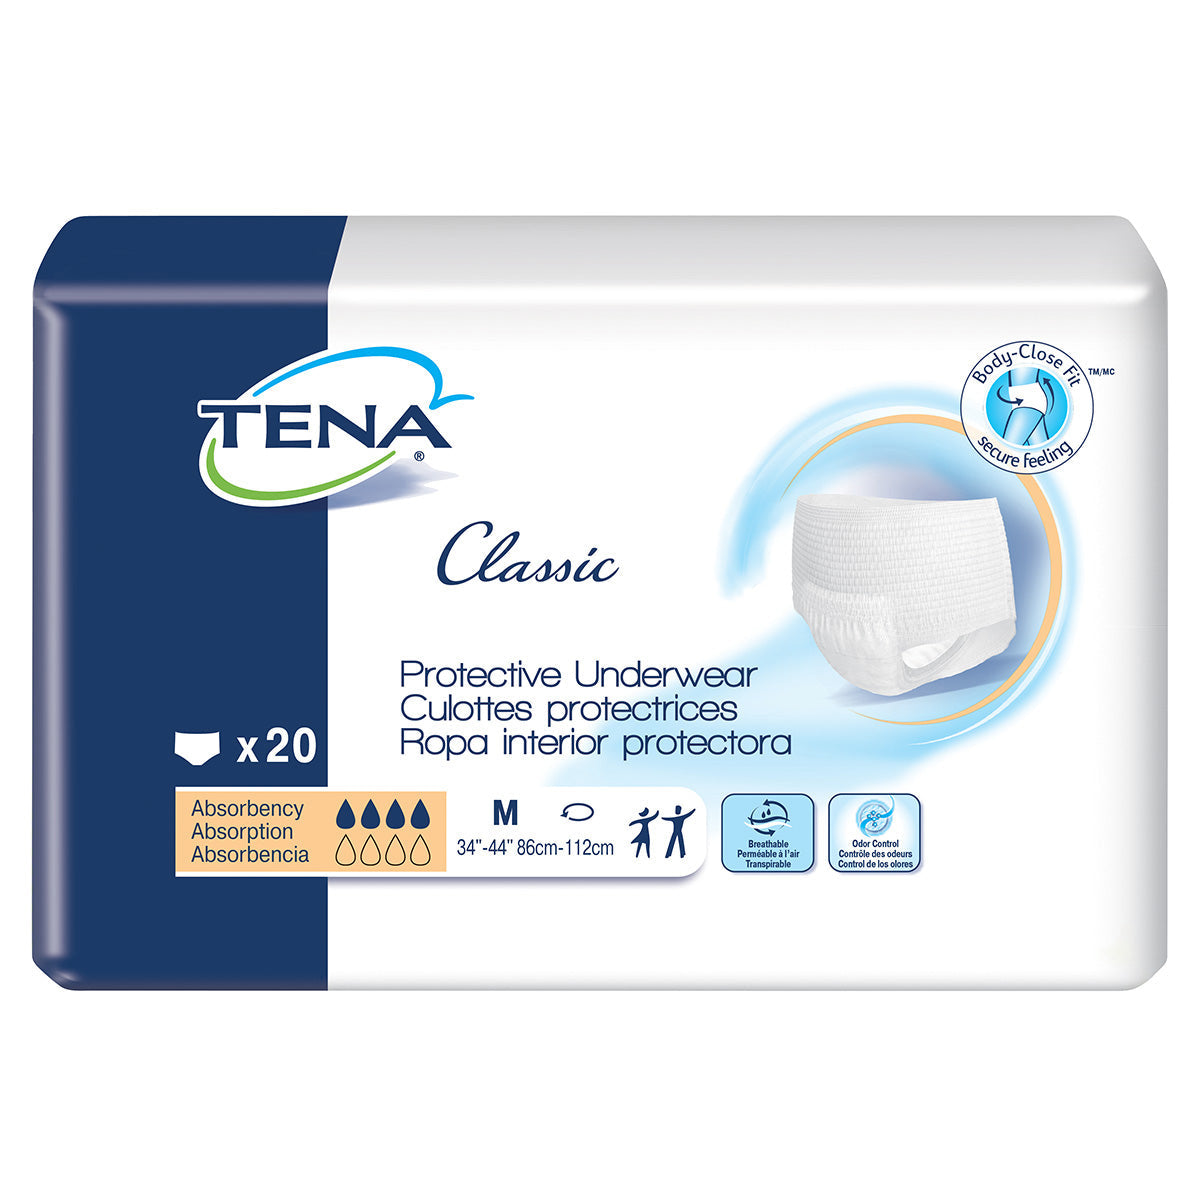 TENA Regular Protective Underwear – Healthwick USA